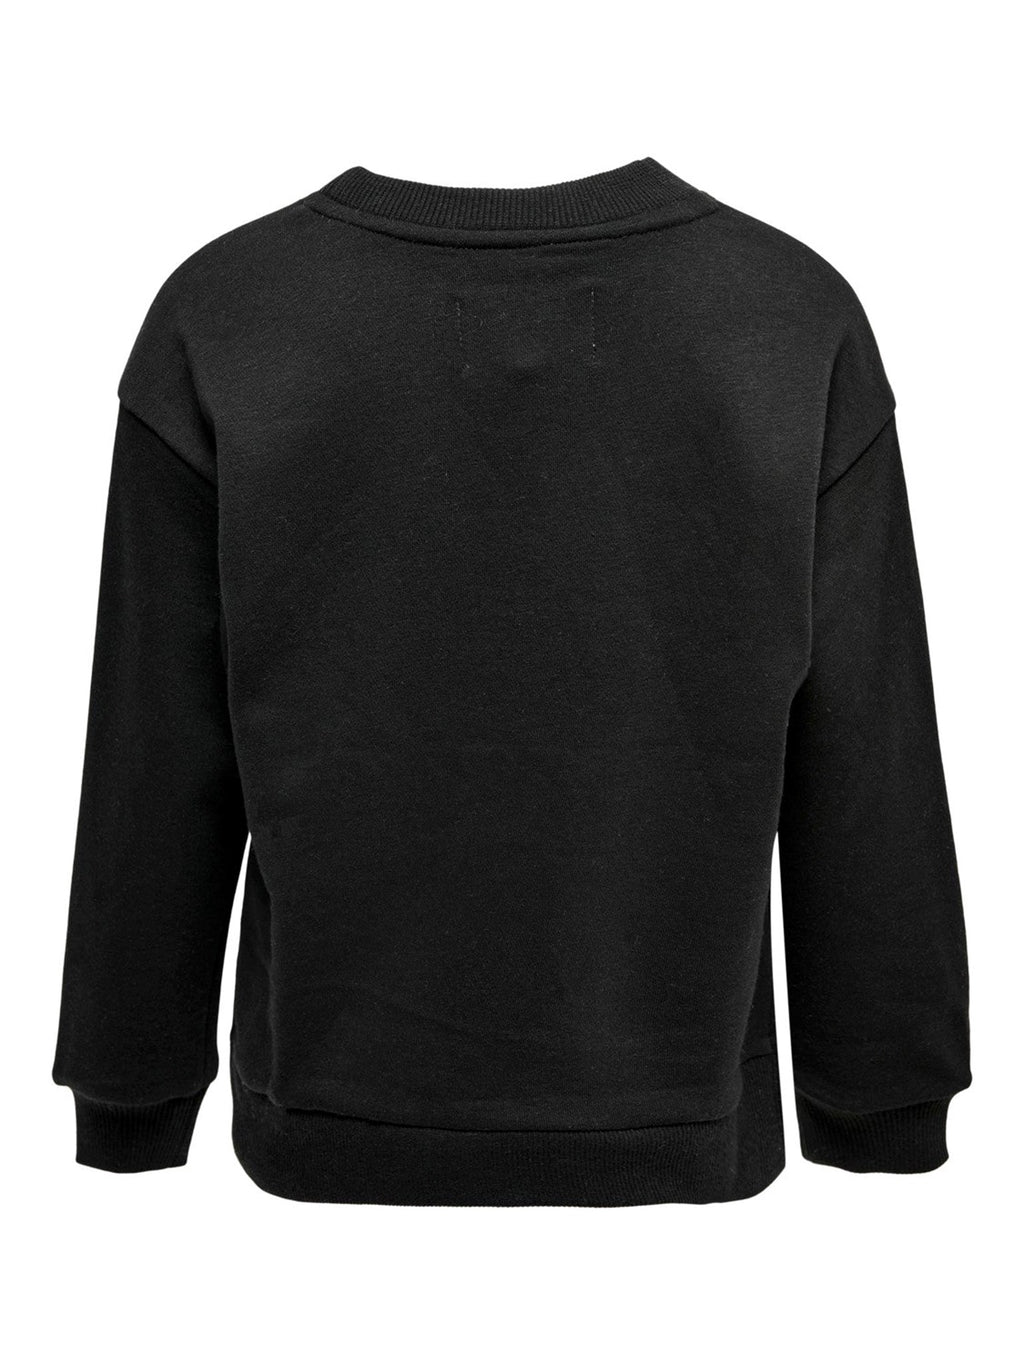 Every Life O-Neck Sweatshirt - Black